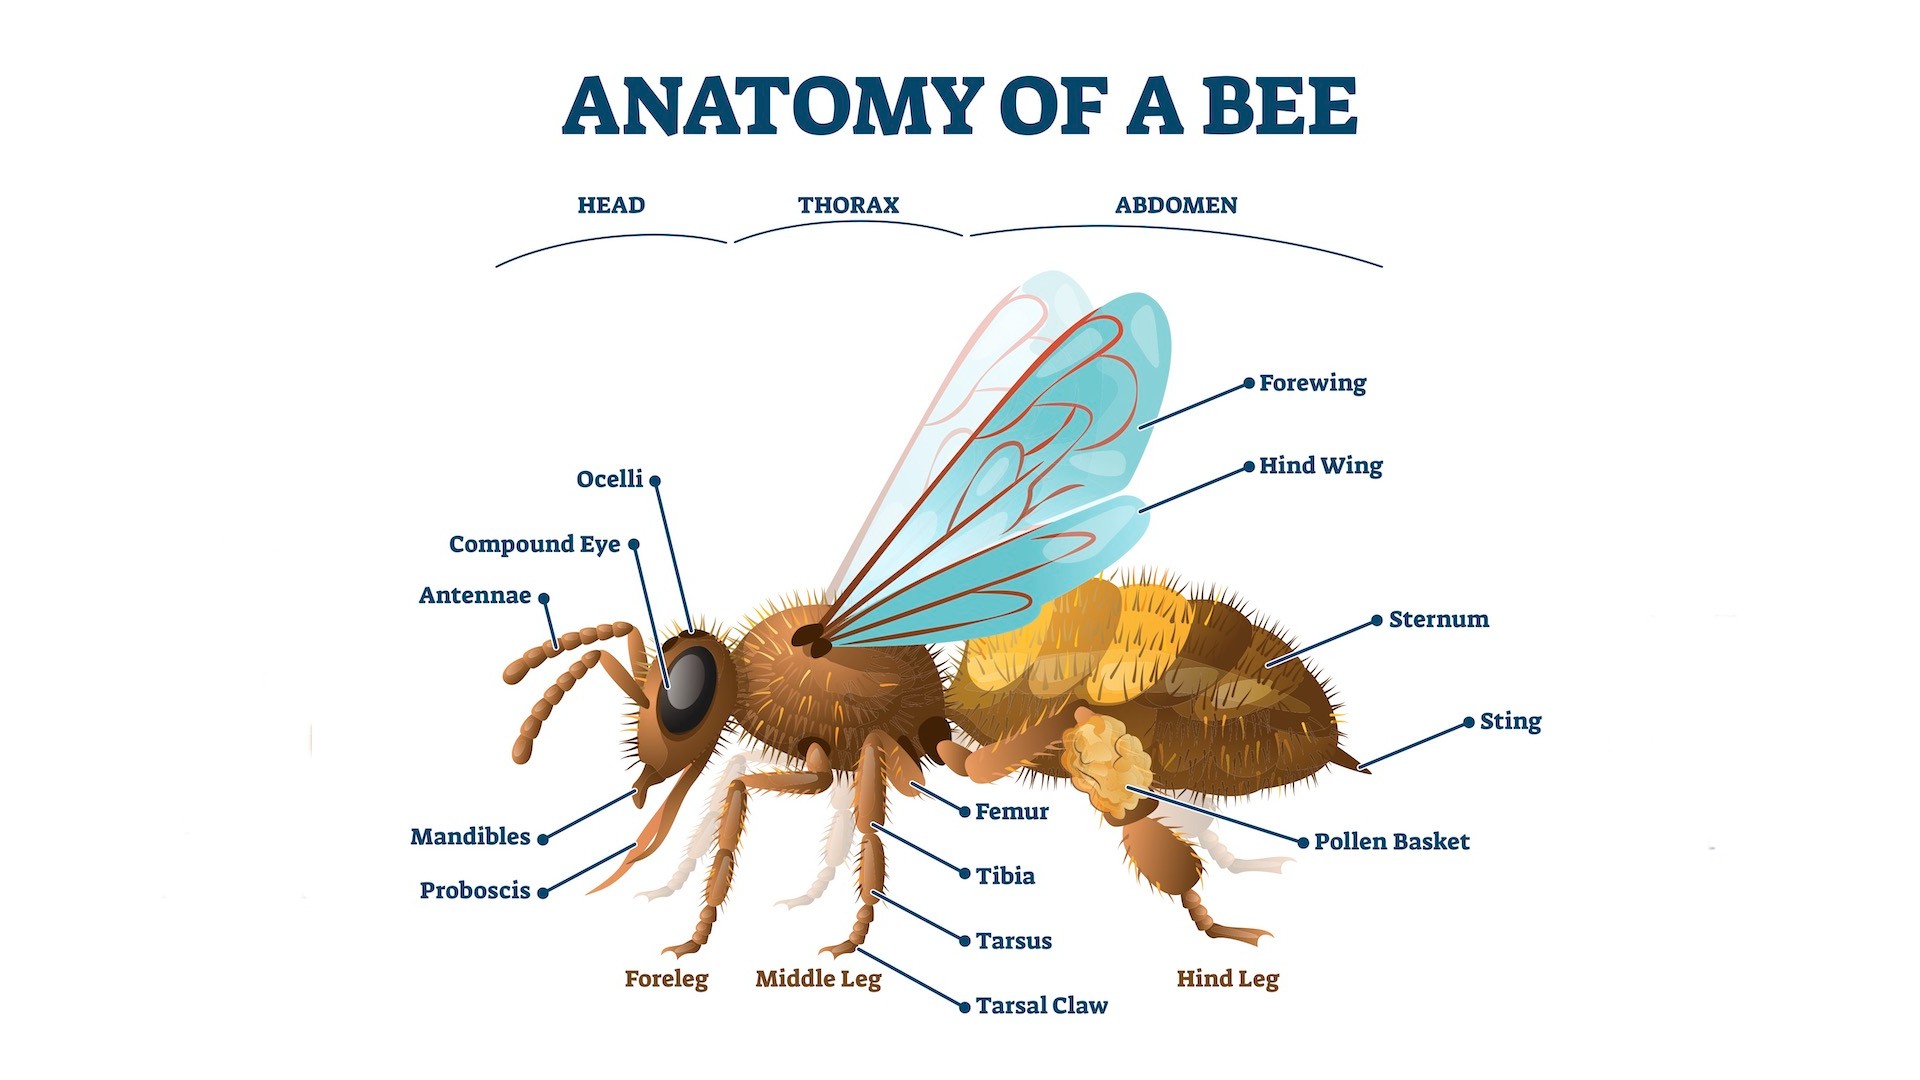 Bee legs have five segments: the coxa, trochanter, femur, tibia and tarsus.